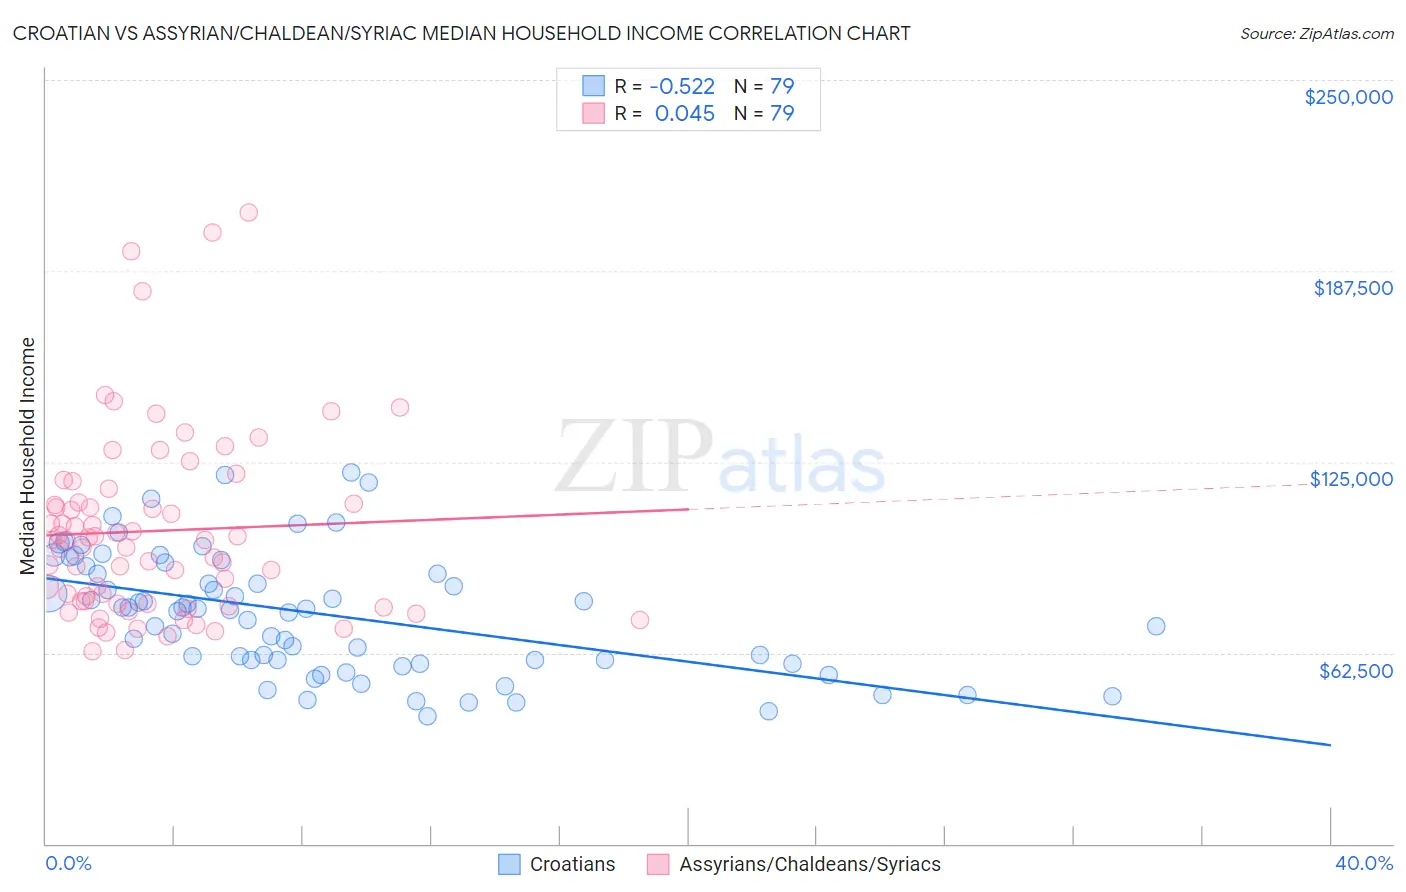 Croatian vs Assyrian/Chaldean/Syriac Median Household Income